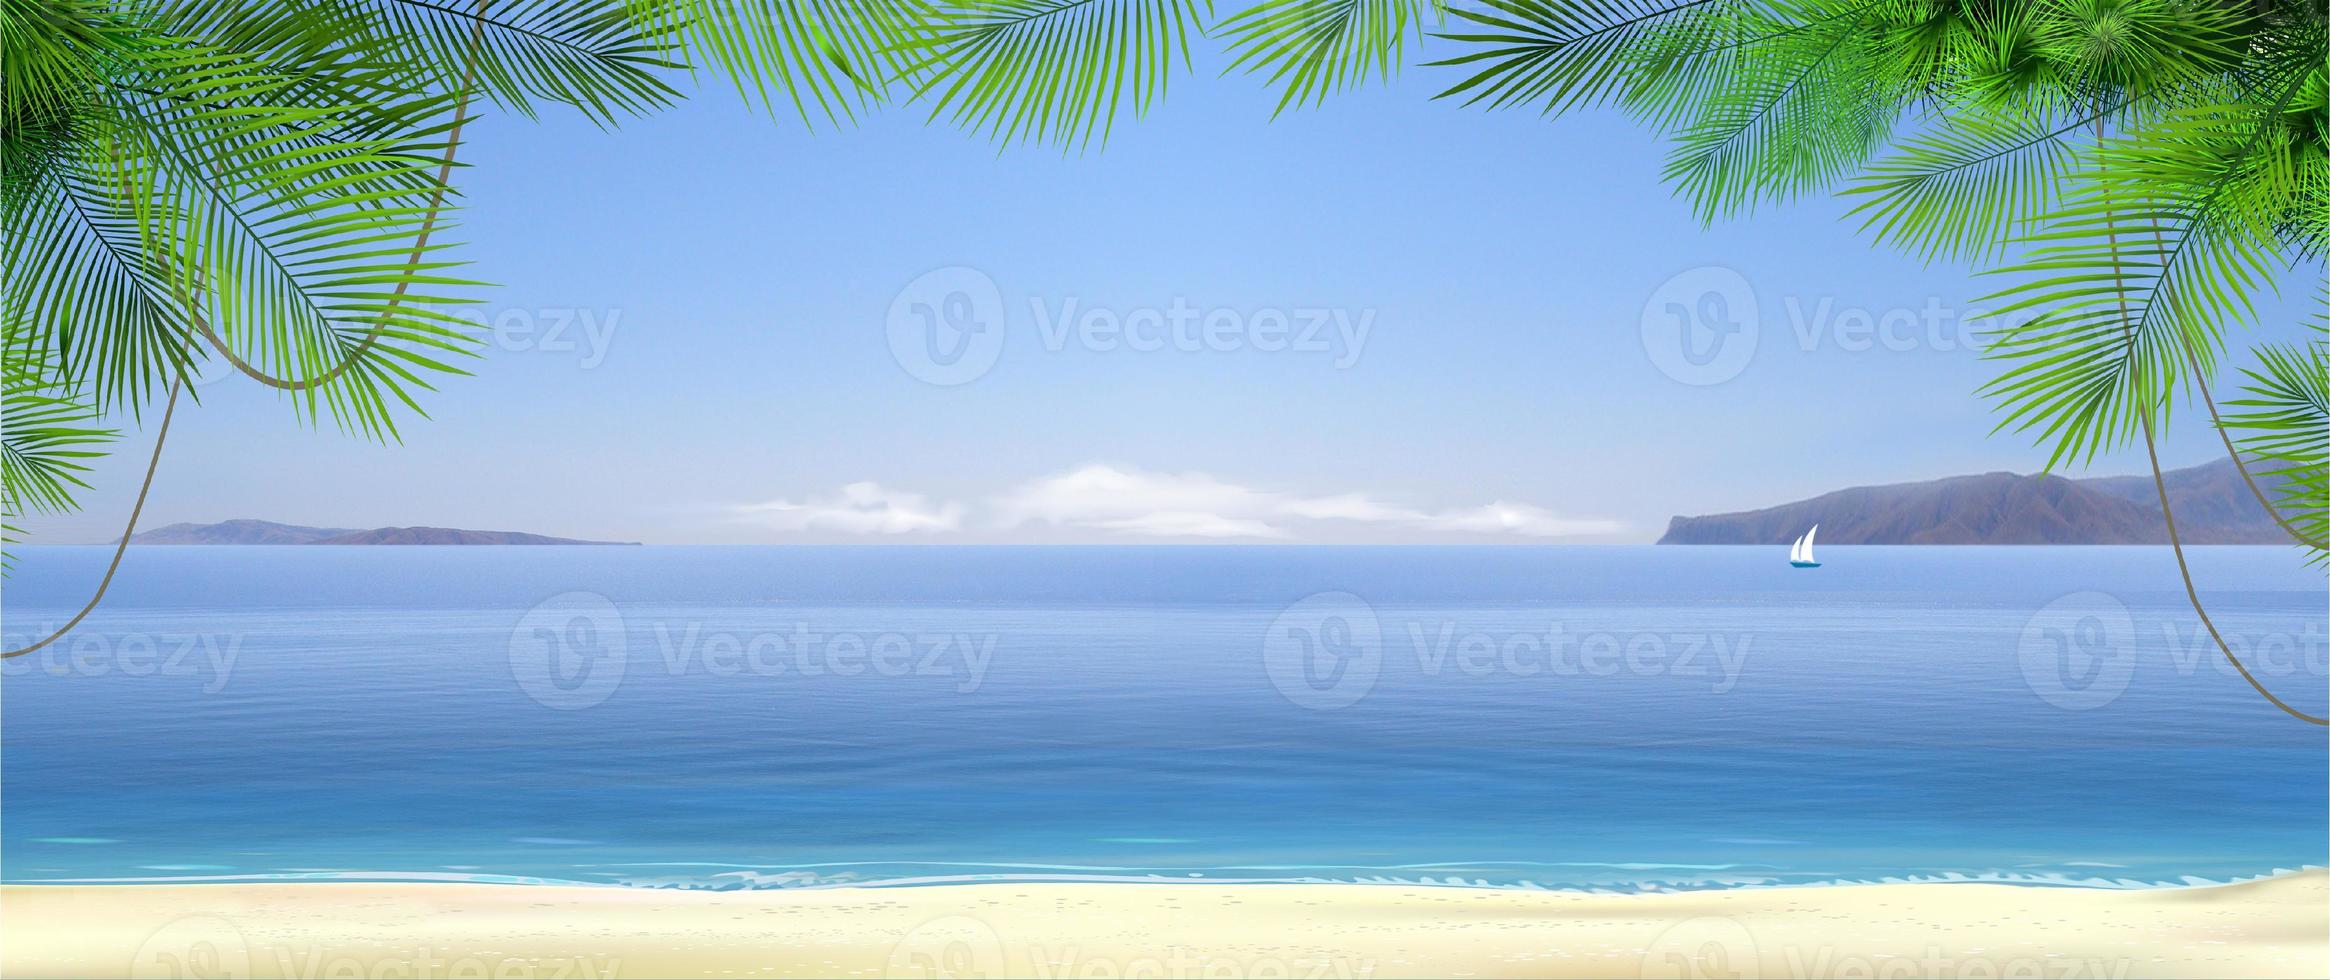 Fondo de banner de amplia playa tropical. naturaleza del paisaje. recurso foto